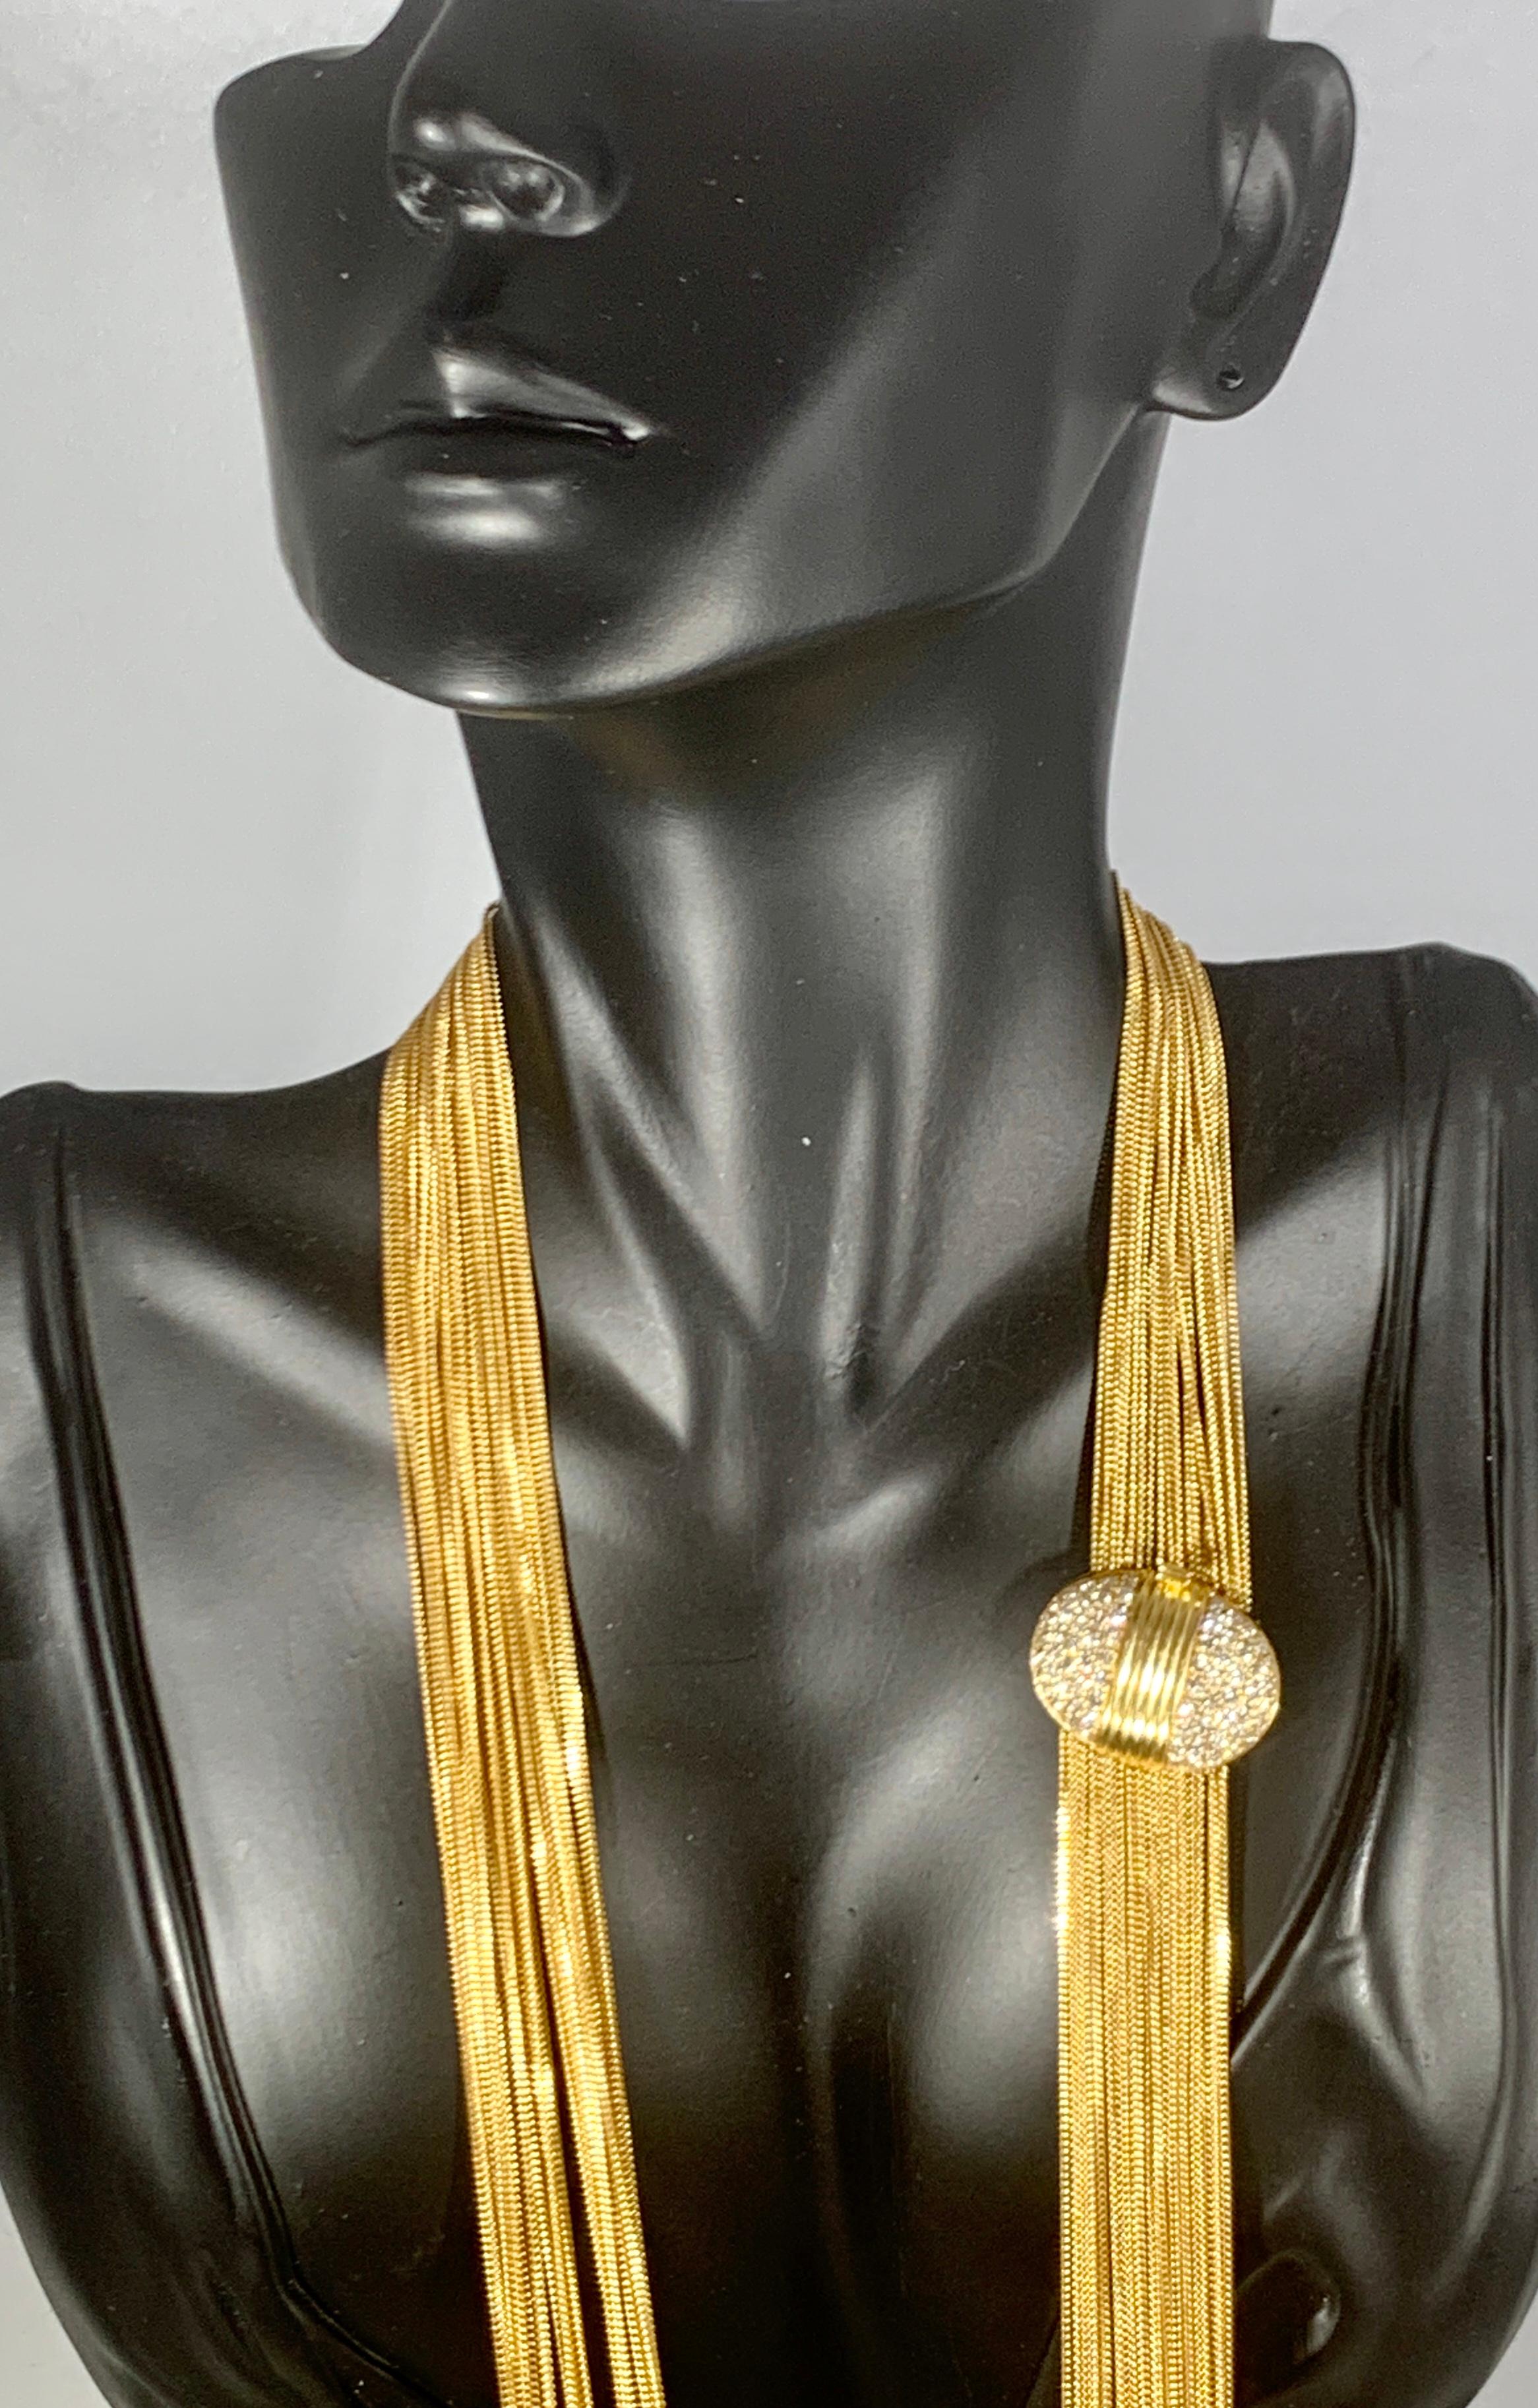 18 karat gold necklace